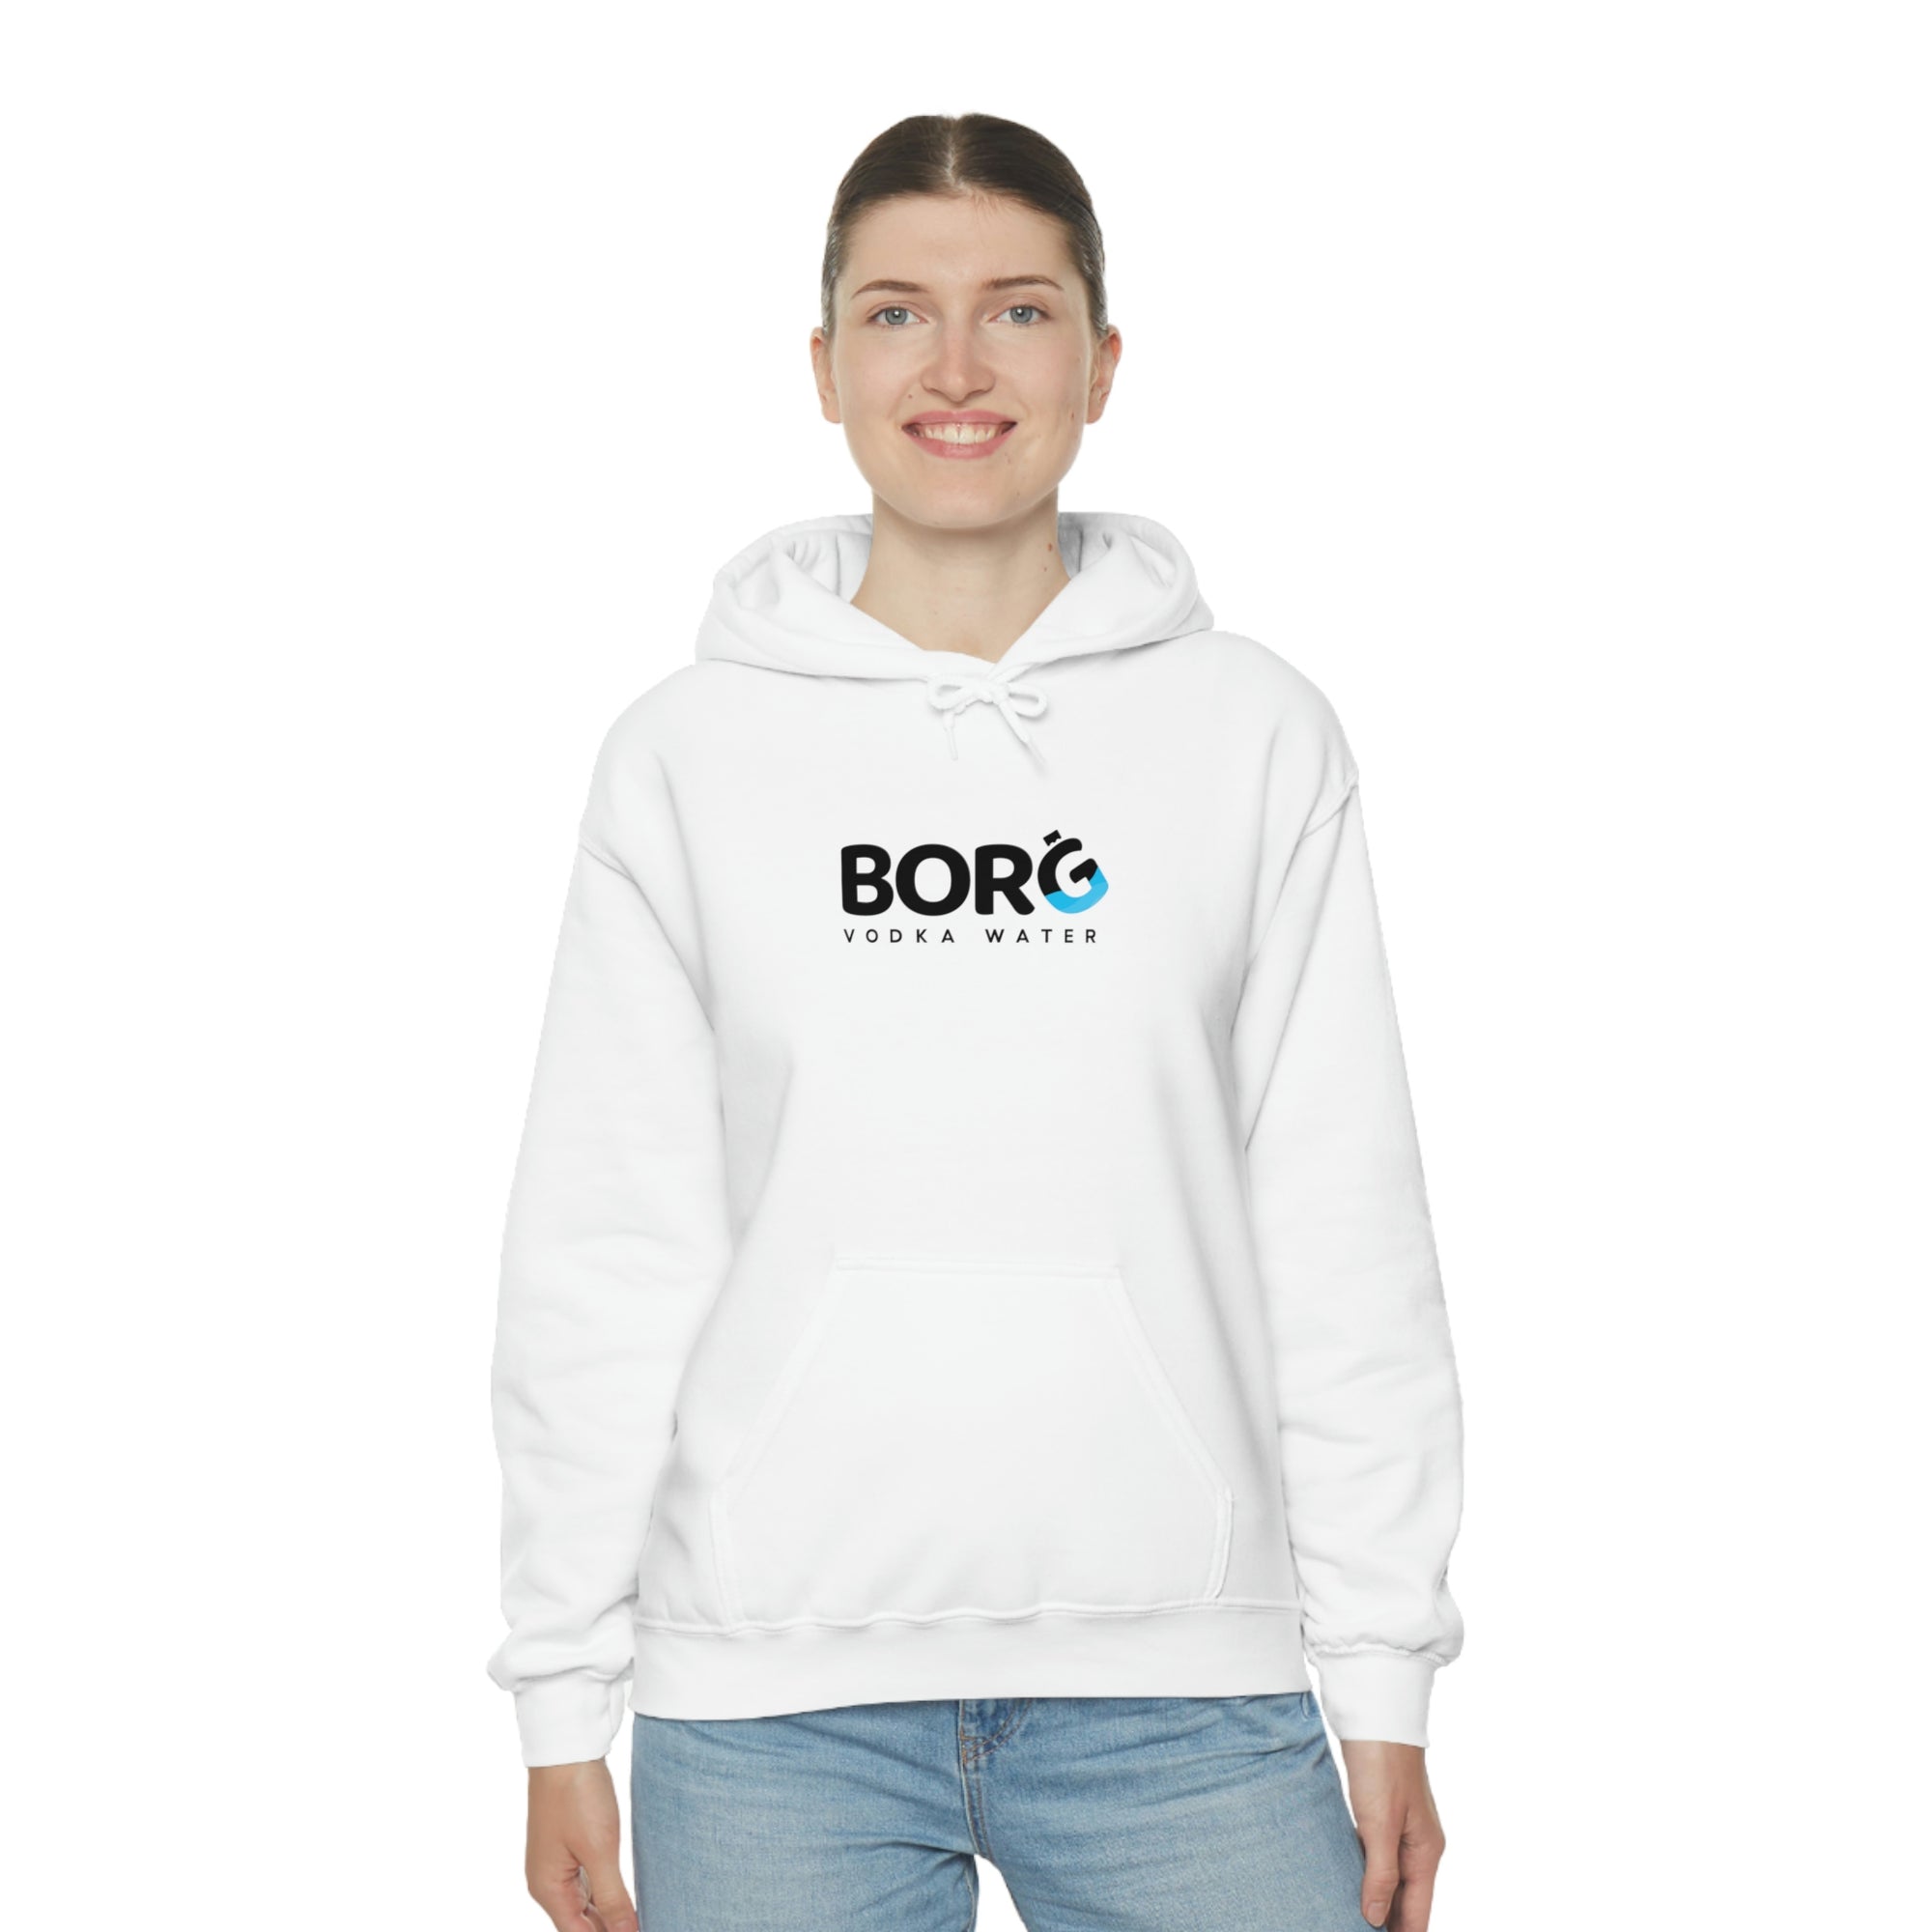 Girl model wearing the white Borg hooded sweatshirt